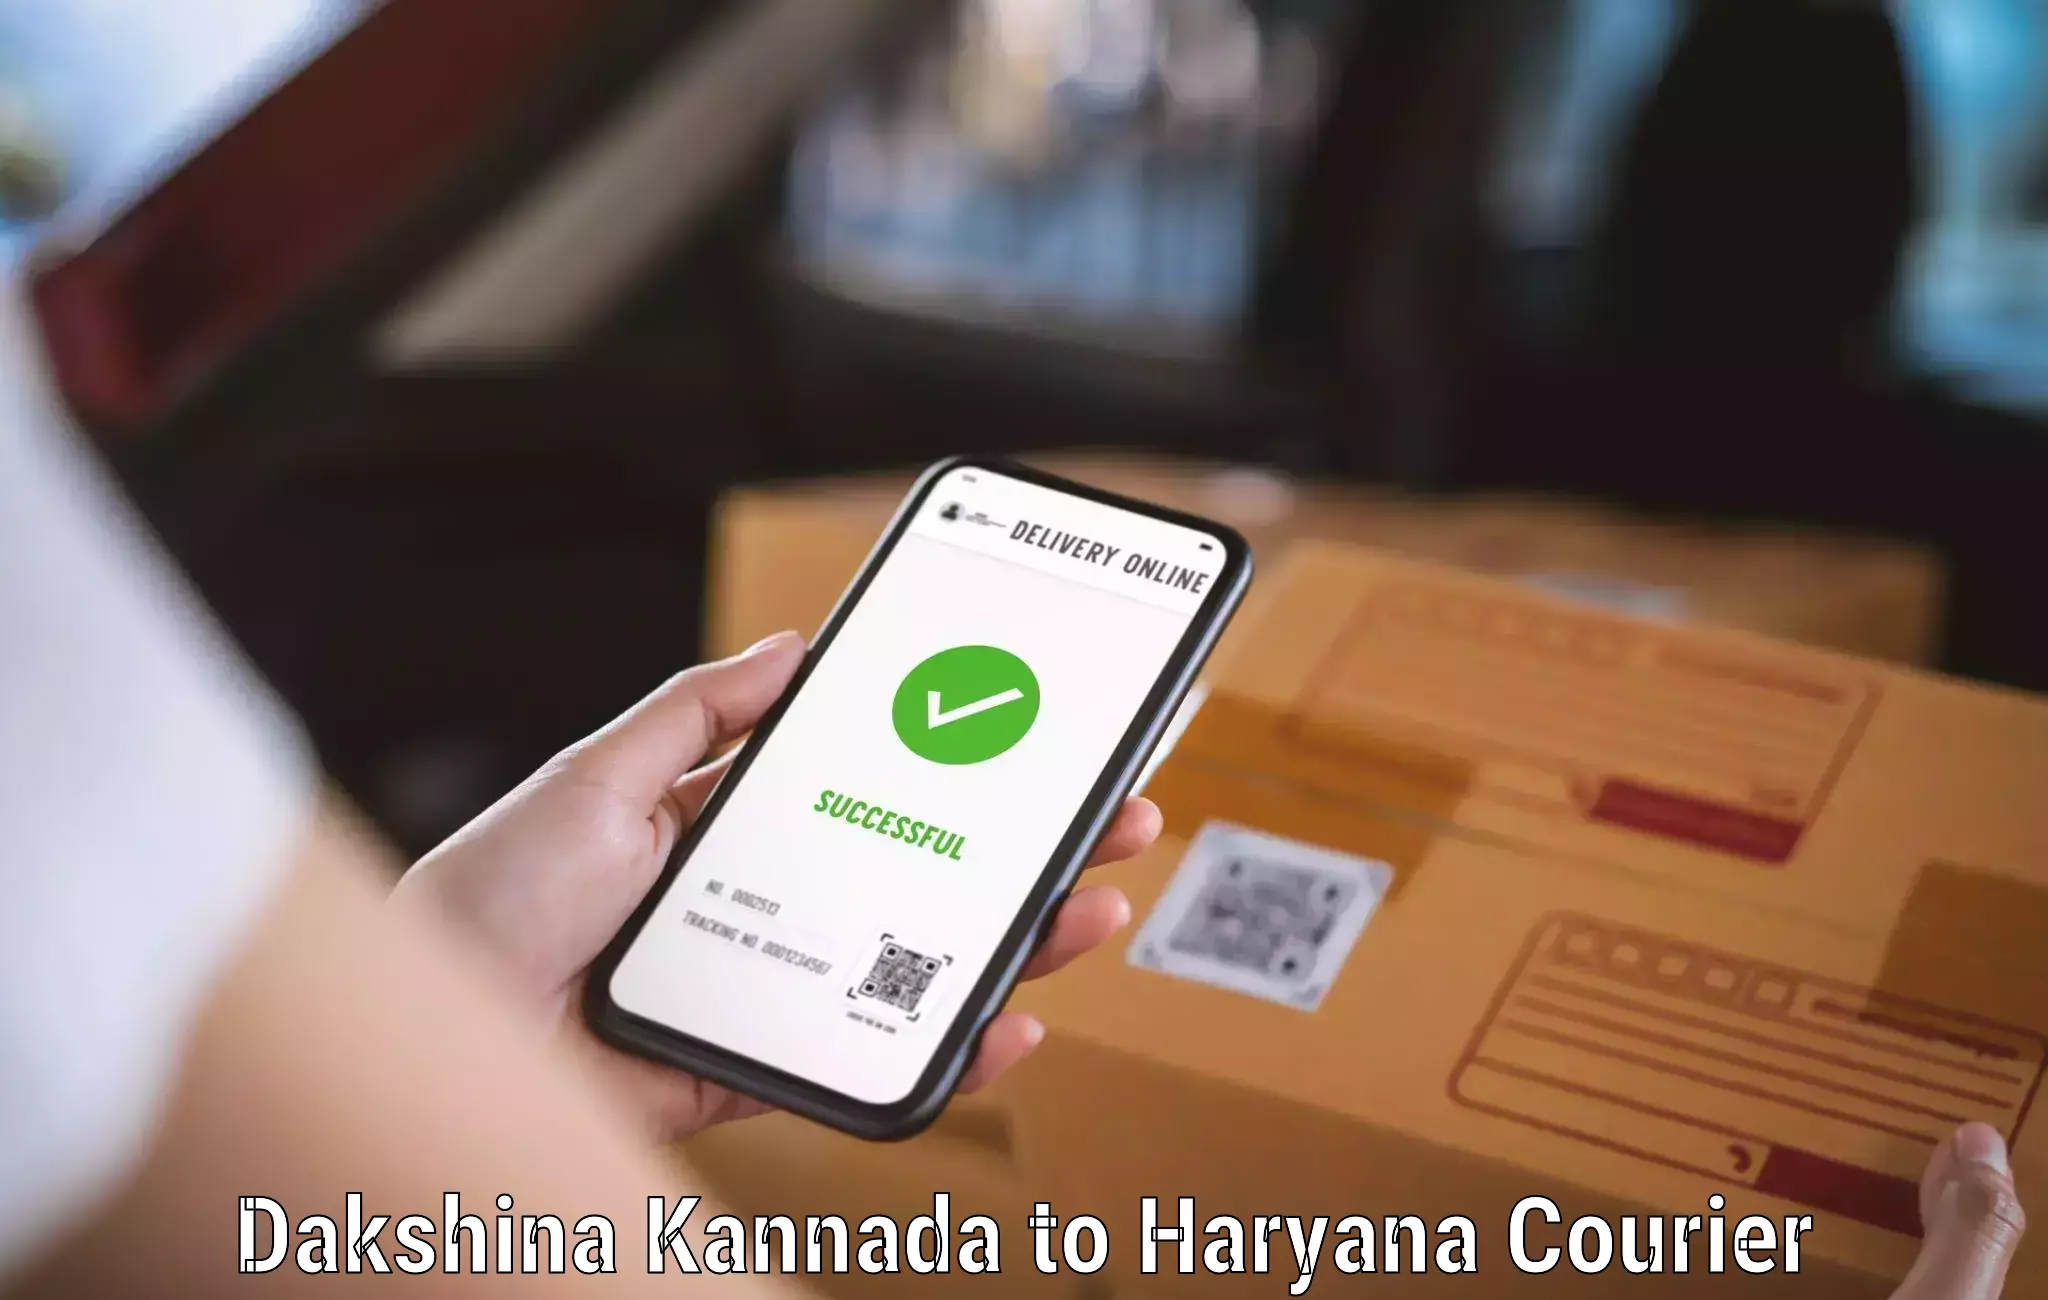 Bulk shipping discounts Dakshina Kannada to NCR Haryana